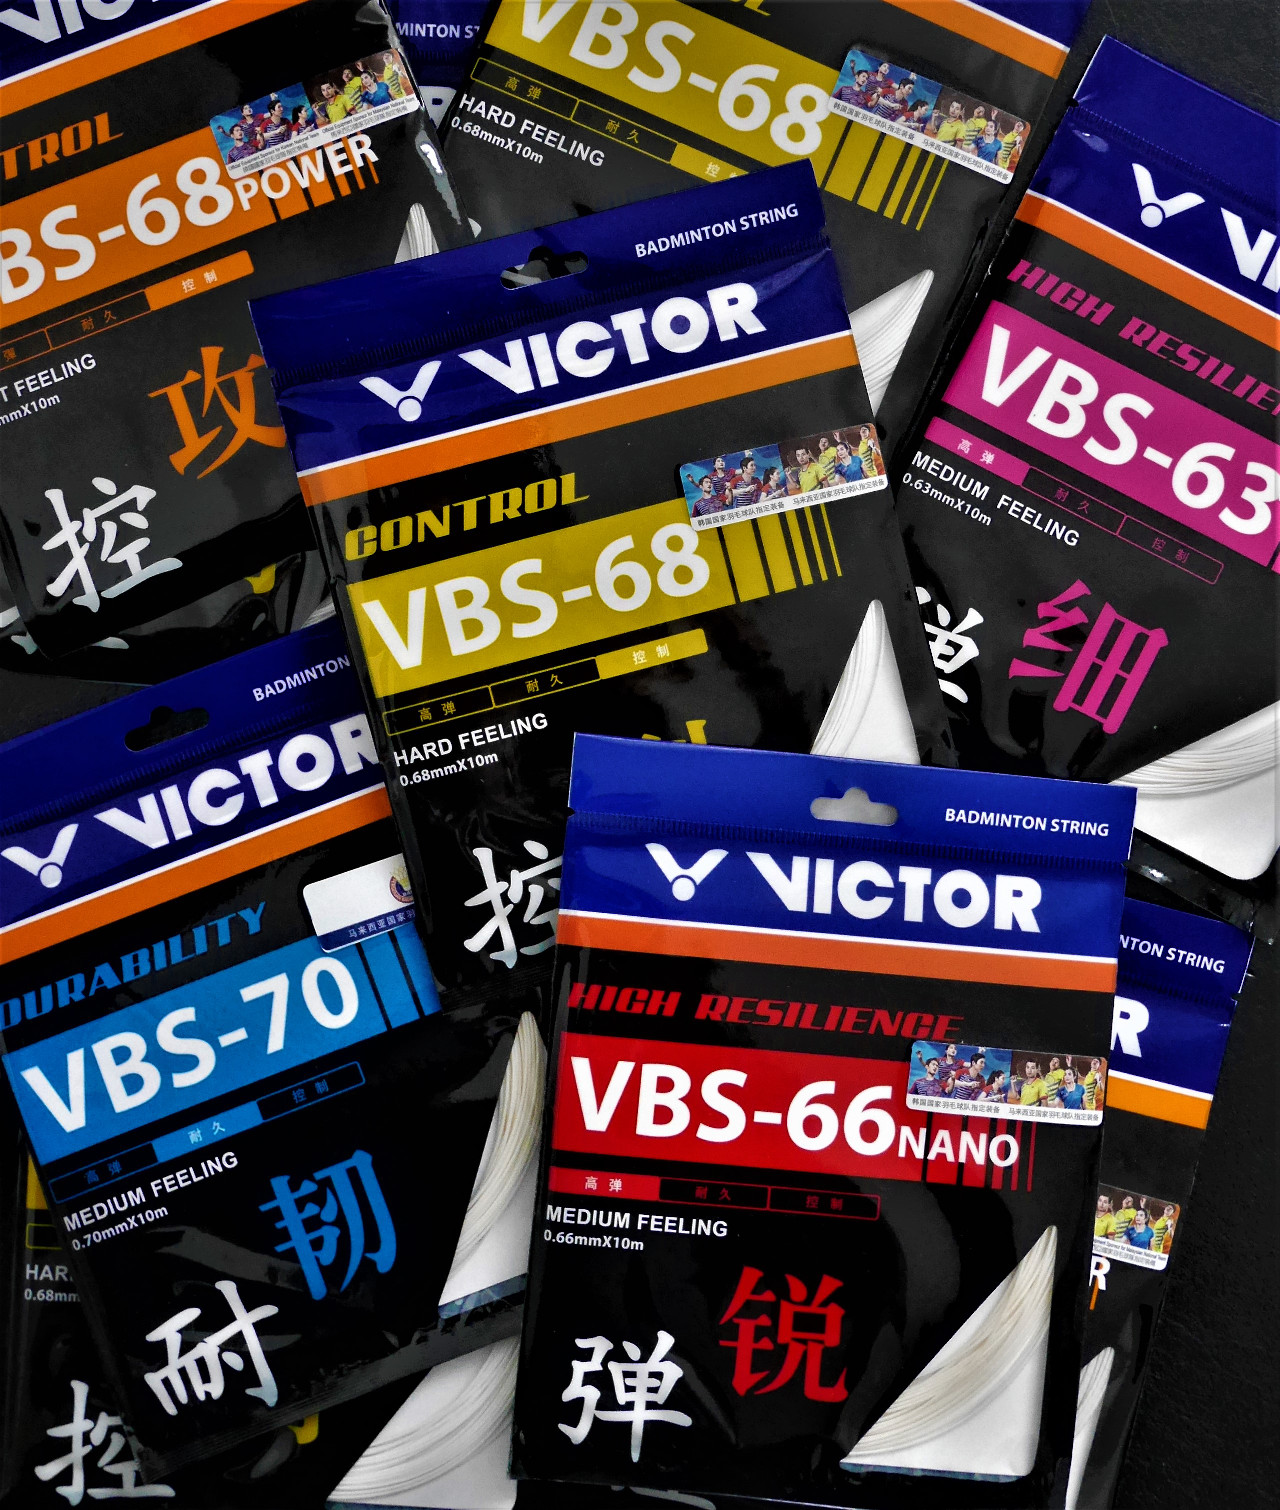 Victor VBS-66 Nano Badminton String (Blue)